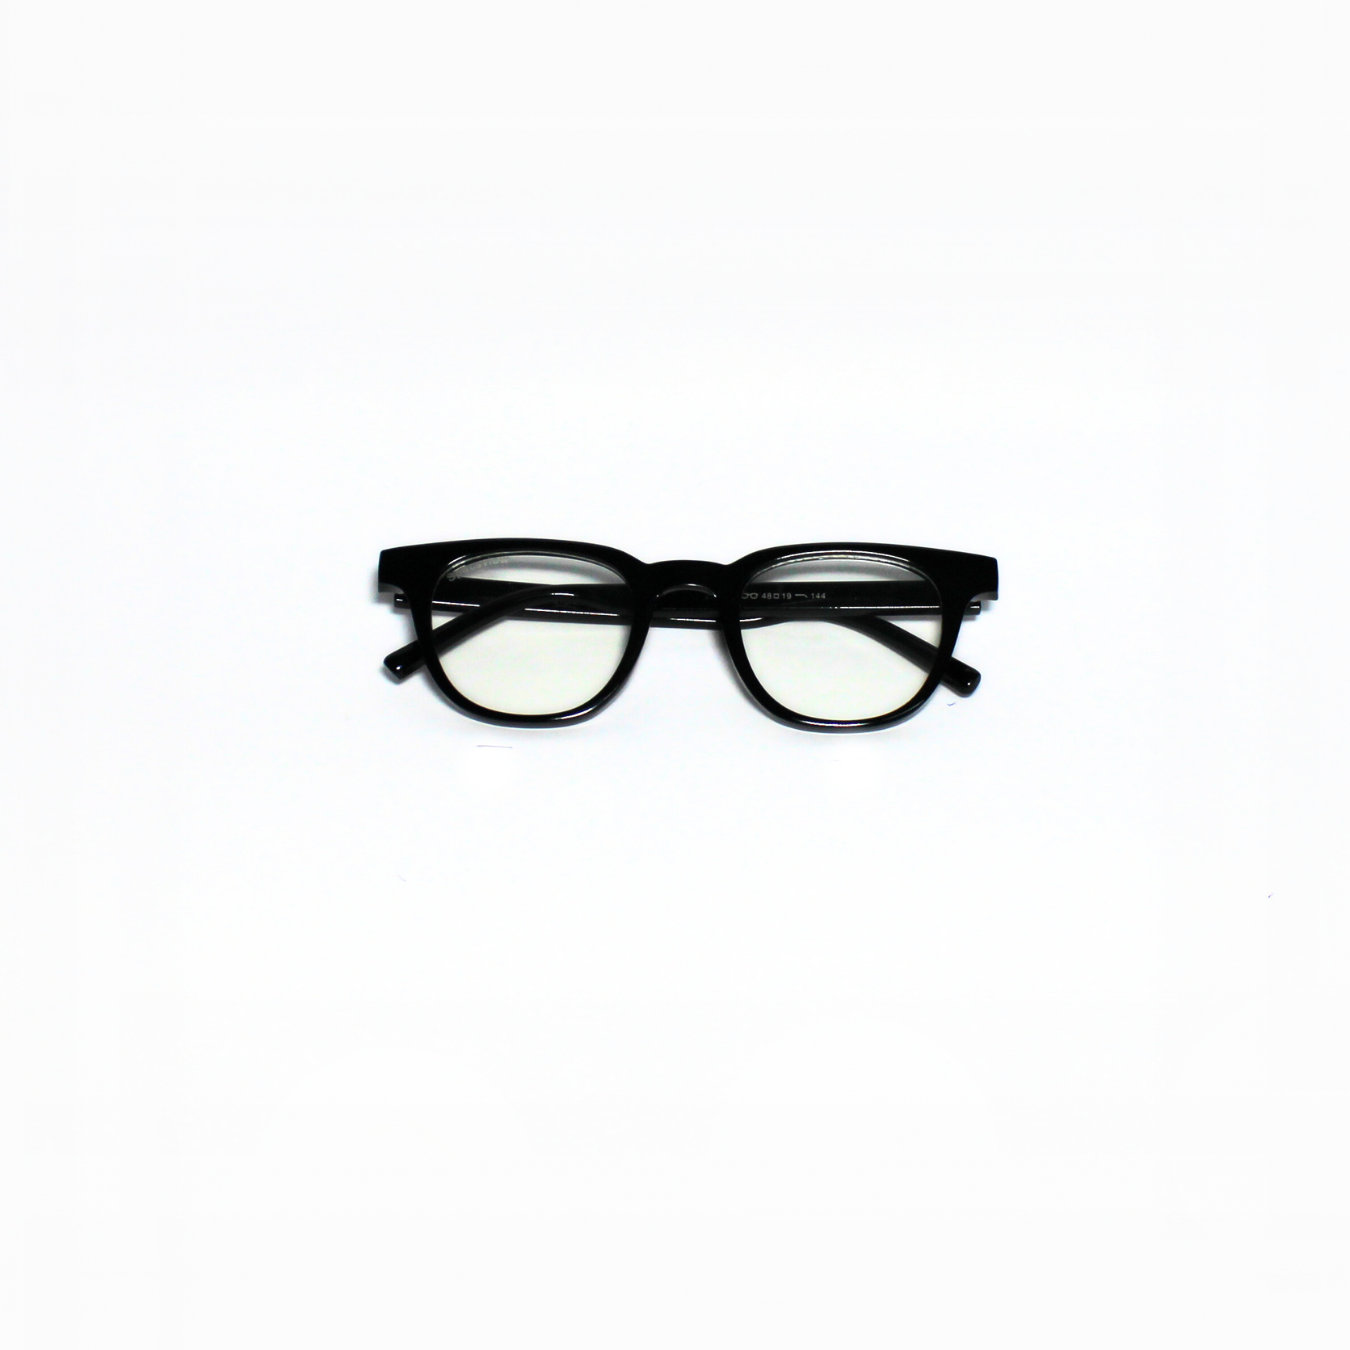 DAPHNE/002 I Zero Power Computer Glasses - Specsview